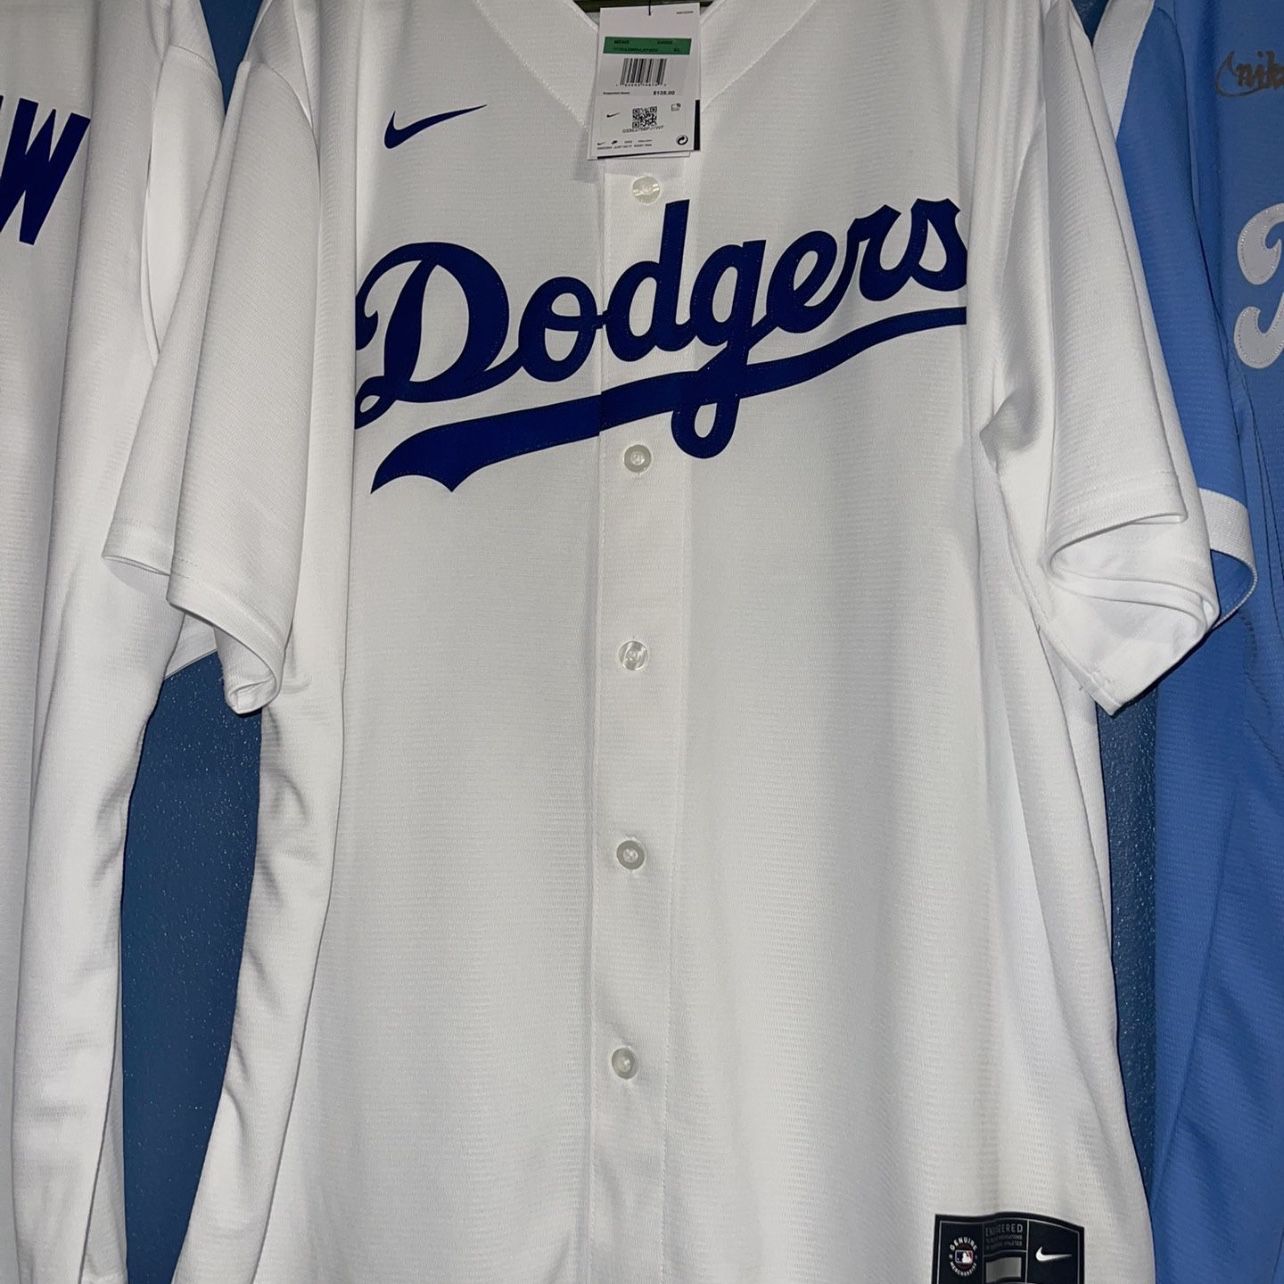 Dodgers Mookie Betts Jersey for Sale in Glmn Hot Spgs, CA - OfferUp